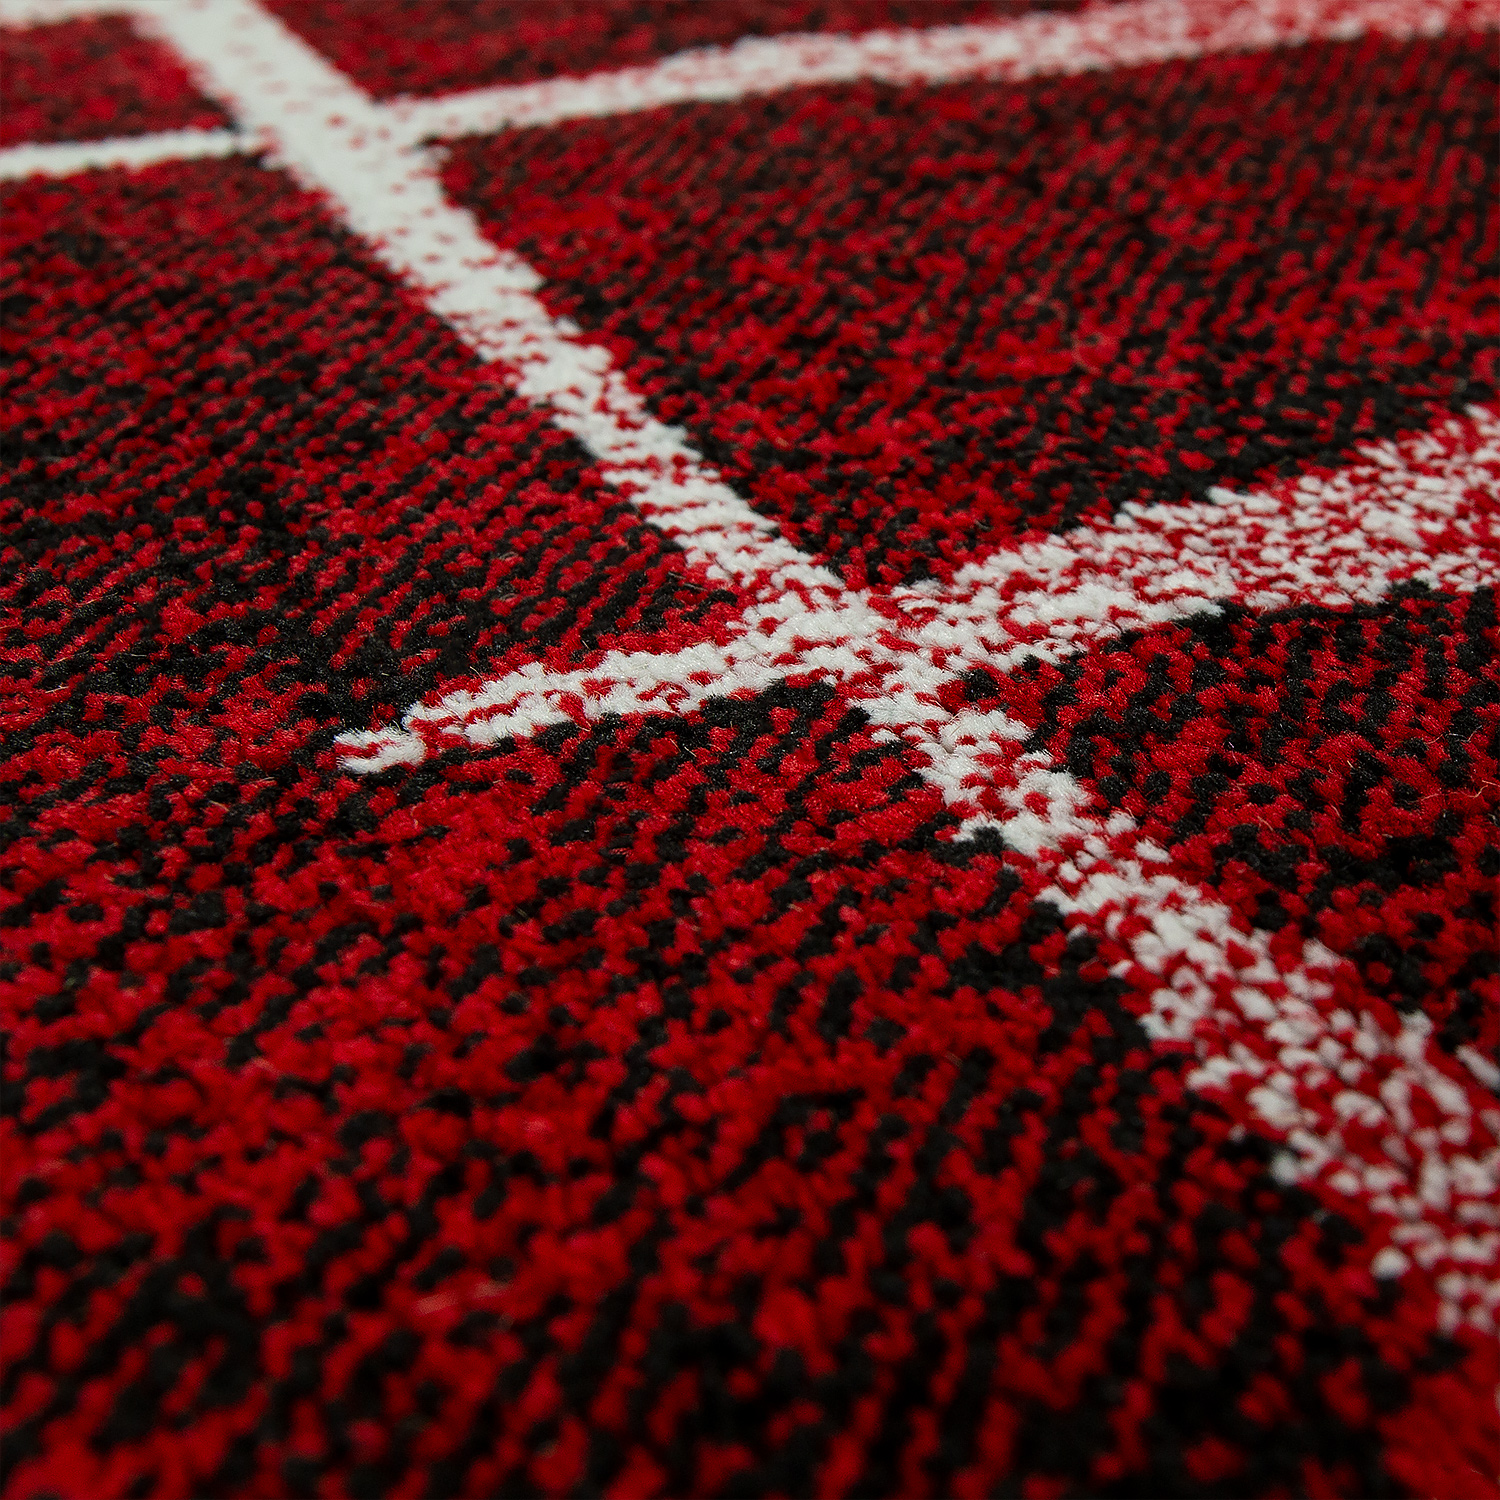 Designer Teppich Modern Trendiger Kurzflor Meliert Rot 